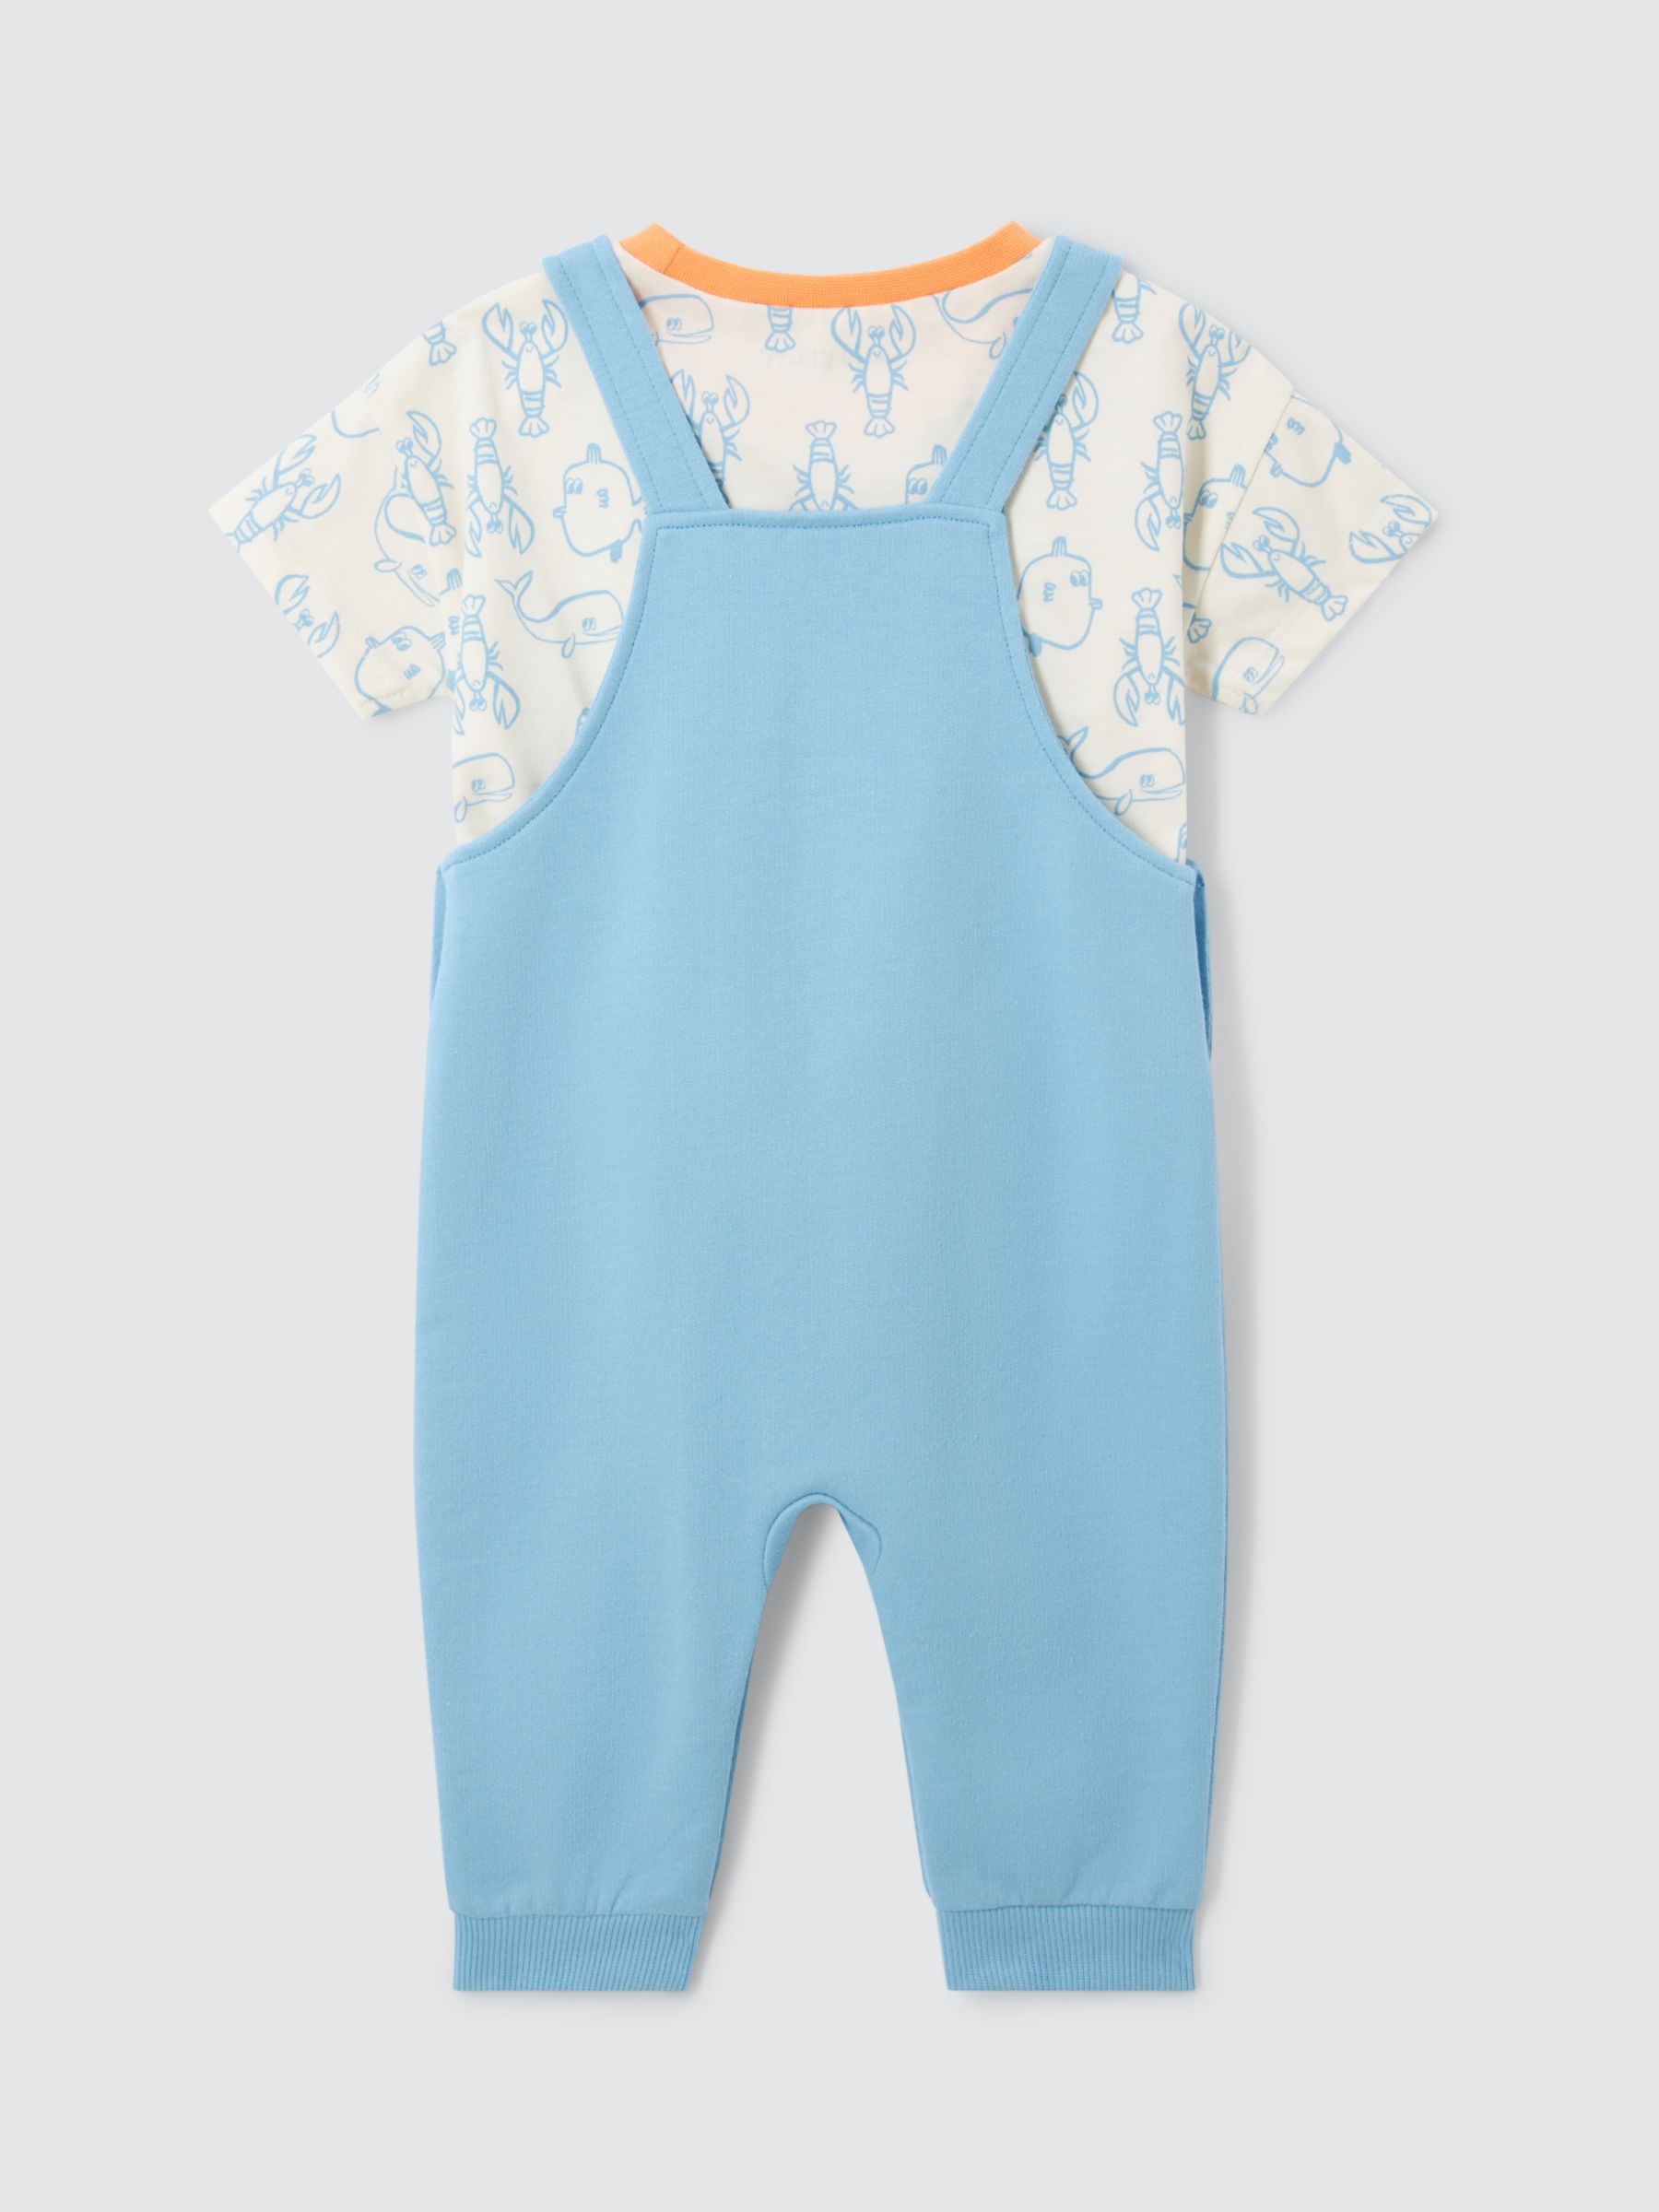 John Lewis ANYDAY Baby Fish Dungarees & T-Shirt Set, Blue, 9-12 months